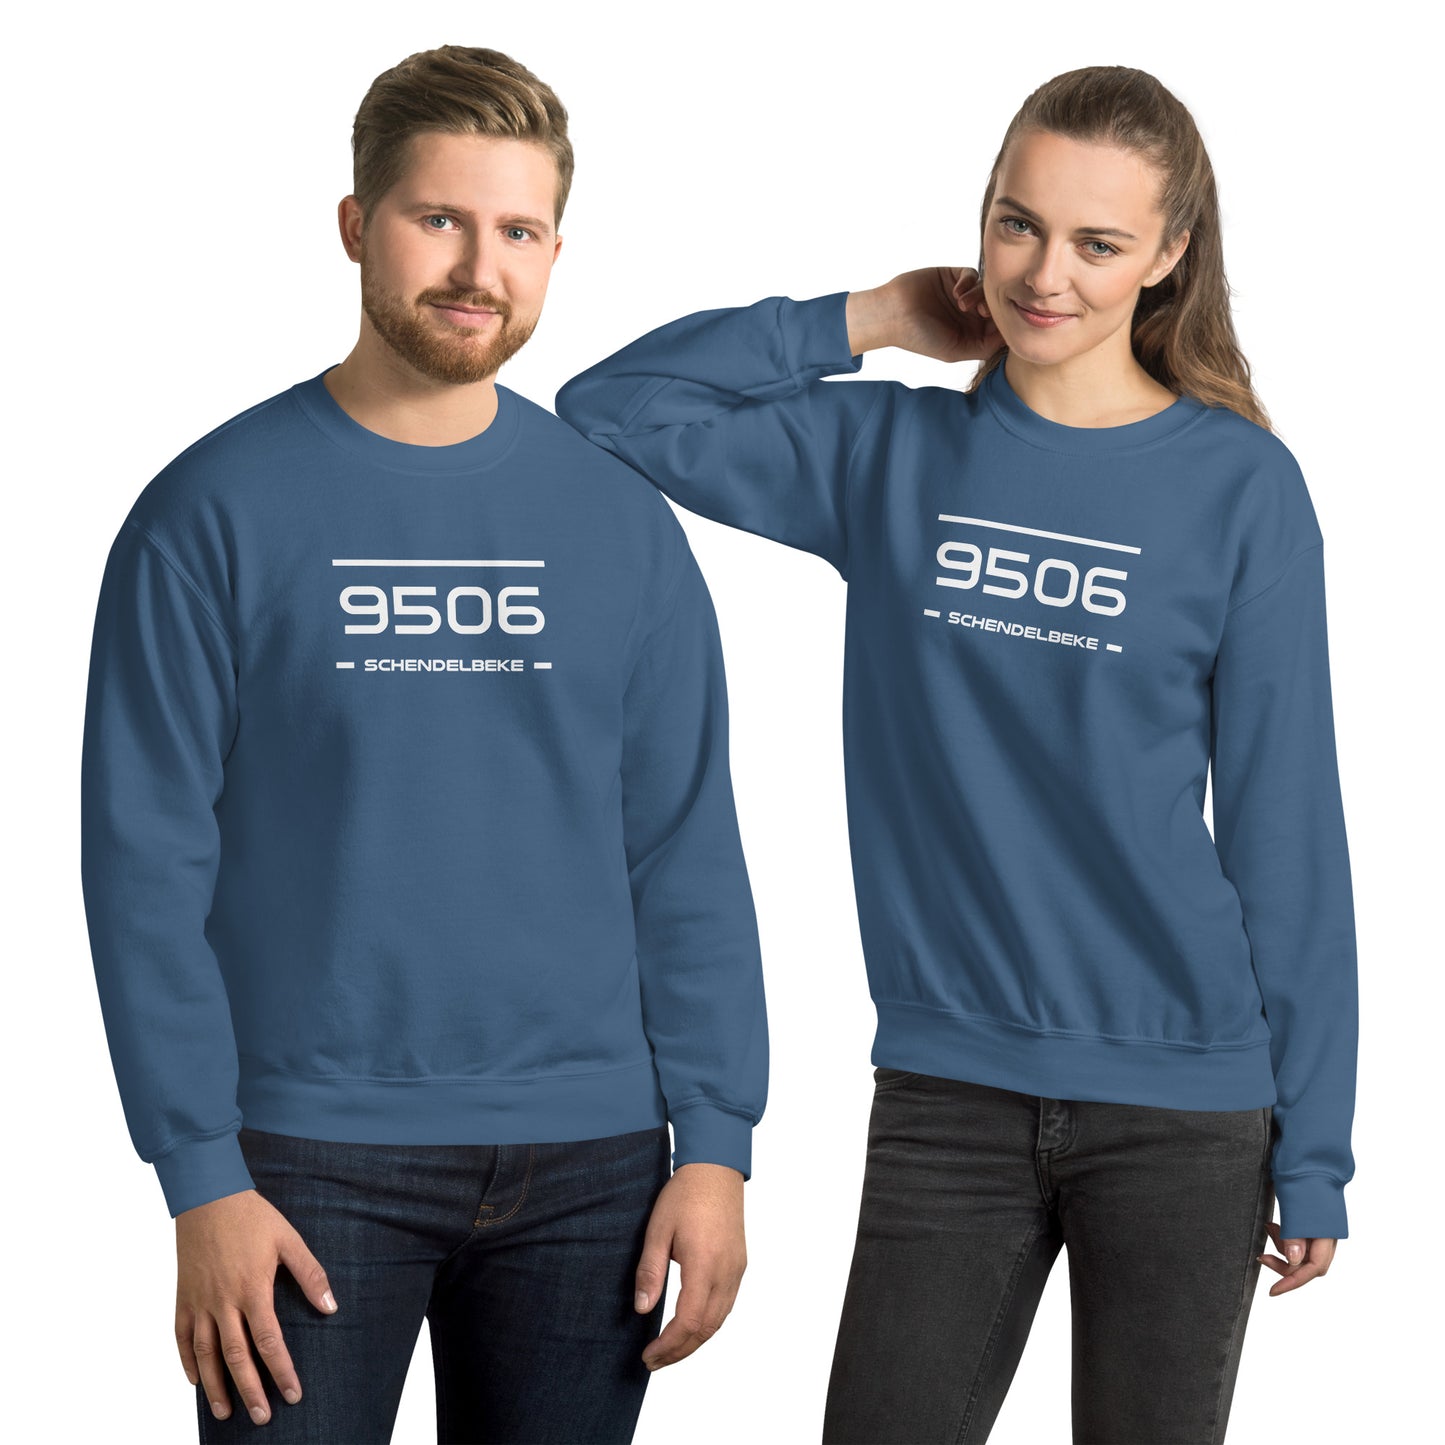 Sweater - 9506 - Schendelbeke (M/V)